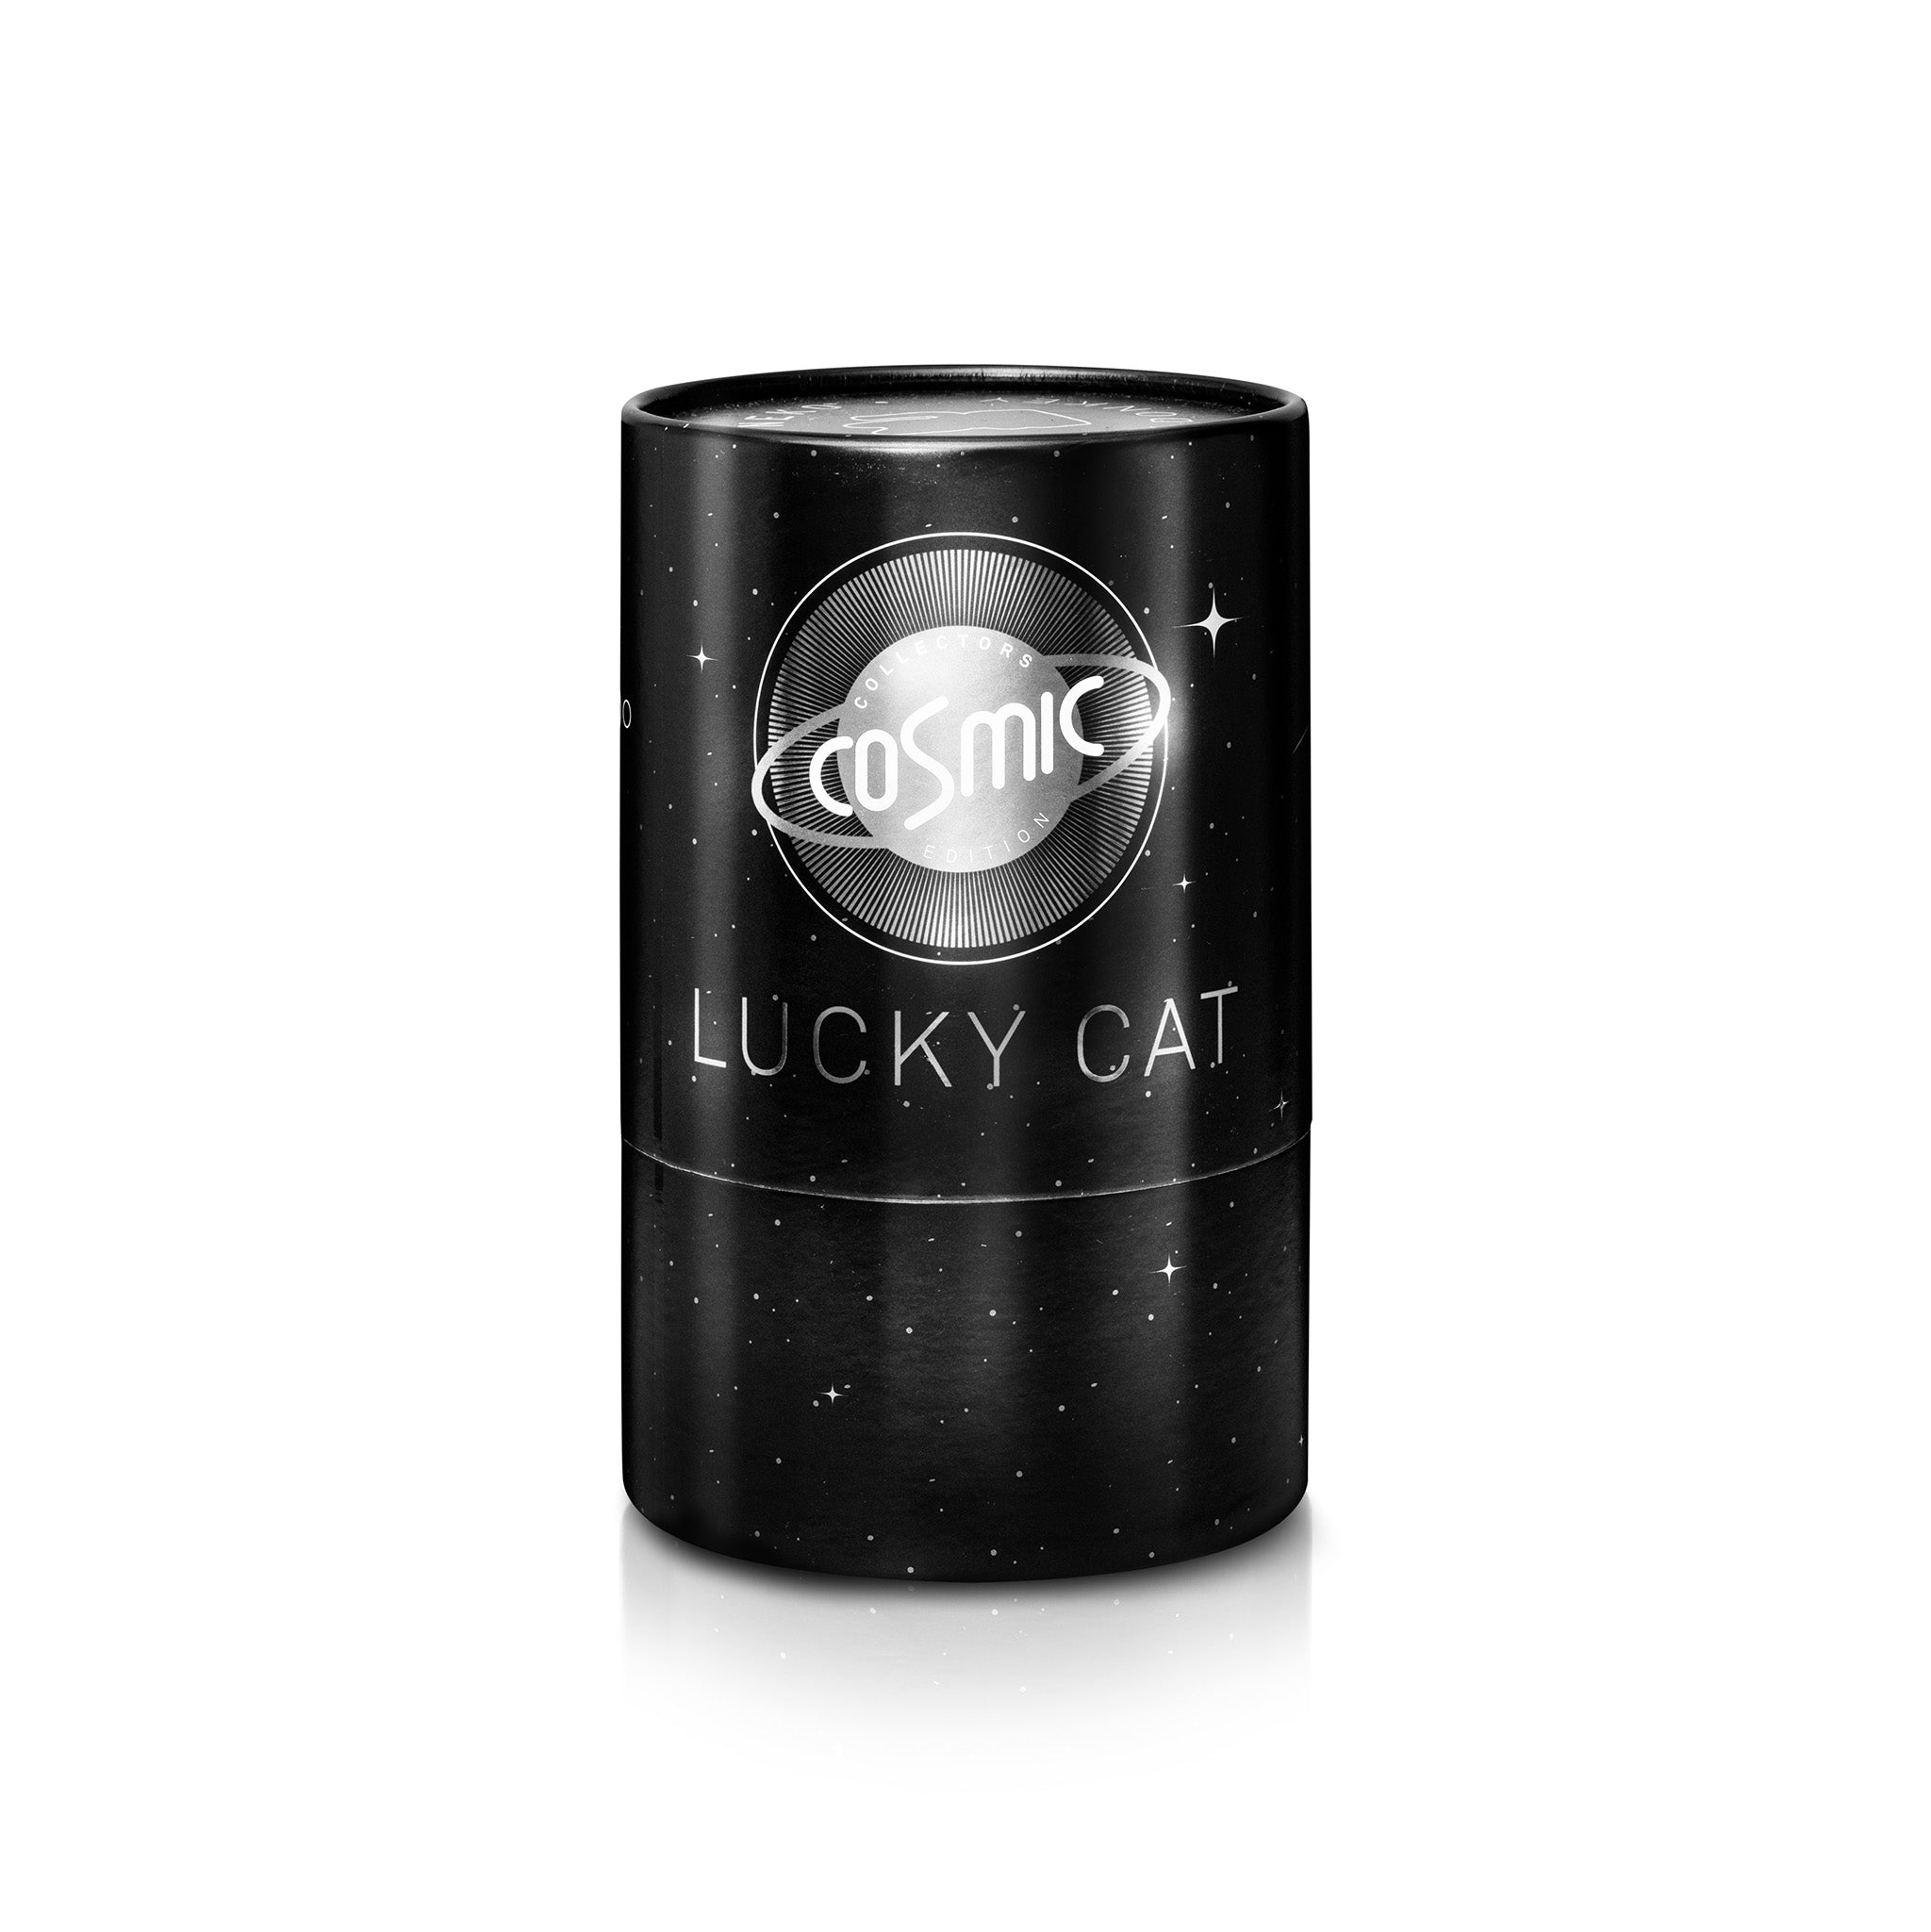 Lucky Cat Cosmic Edition Mercury Shiny Silver